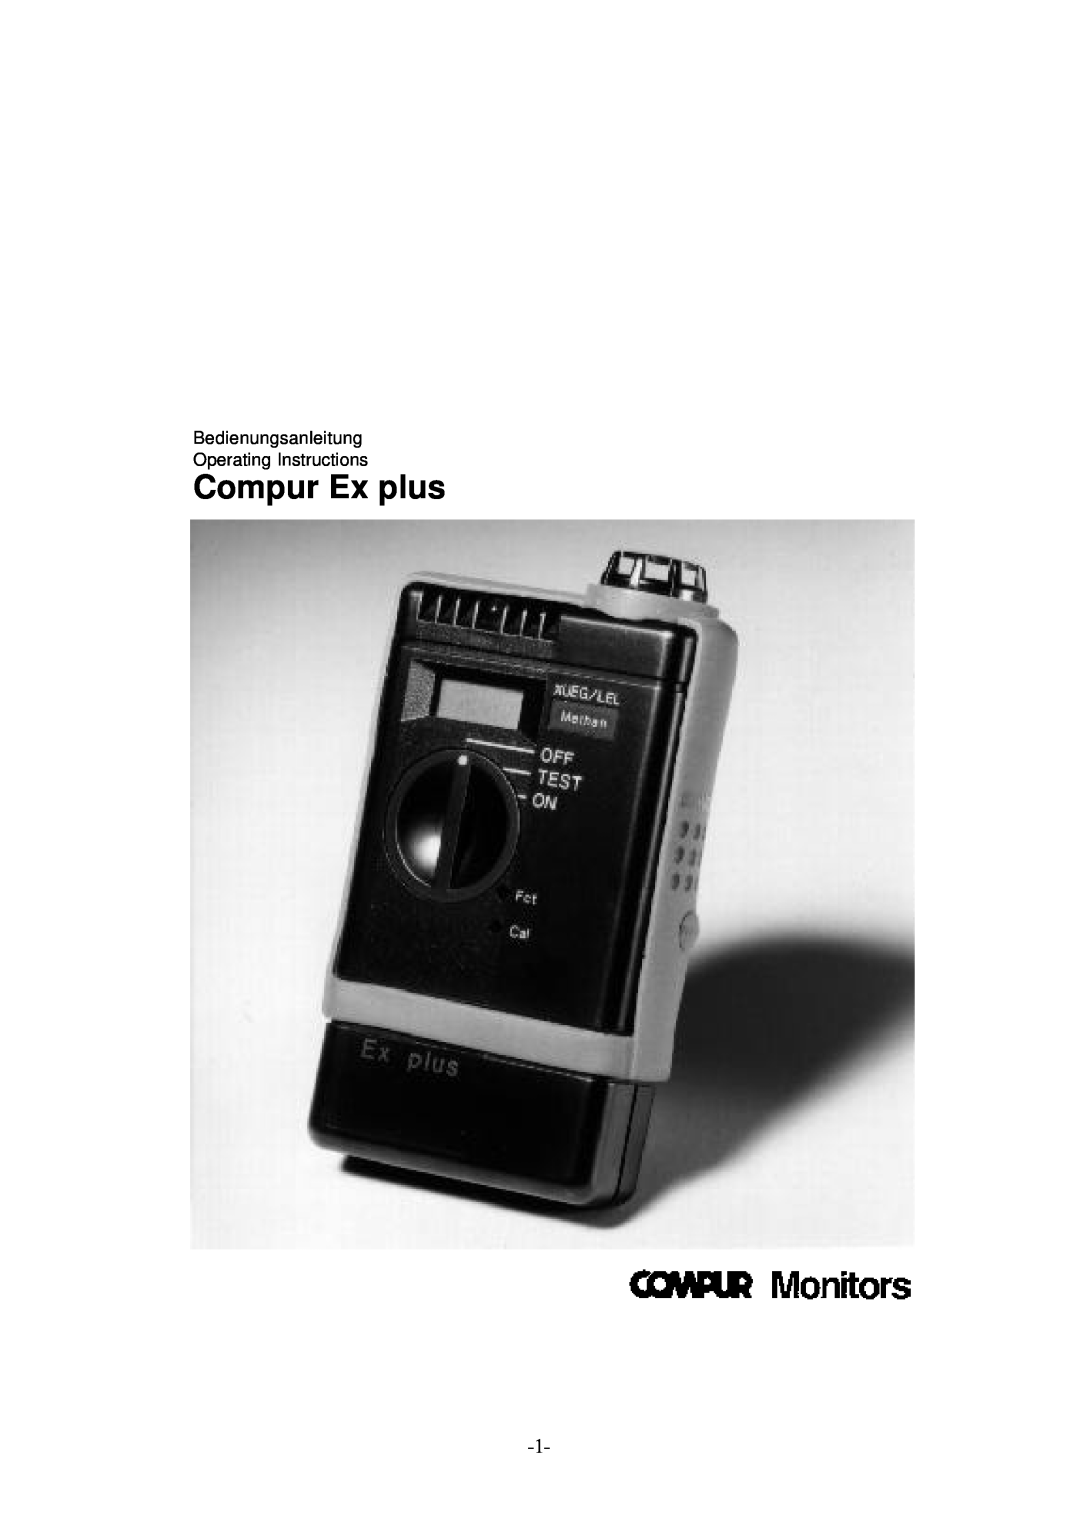 Compur Gas Detector manual Compur Ex plus, Bedienungsanleitung Operating Instructions 